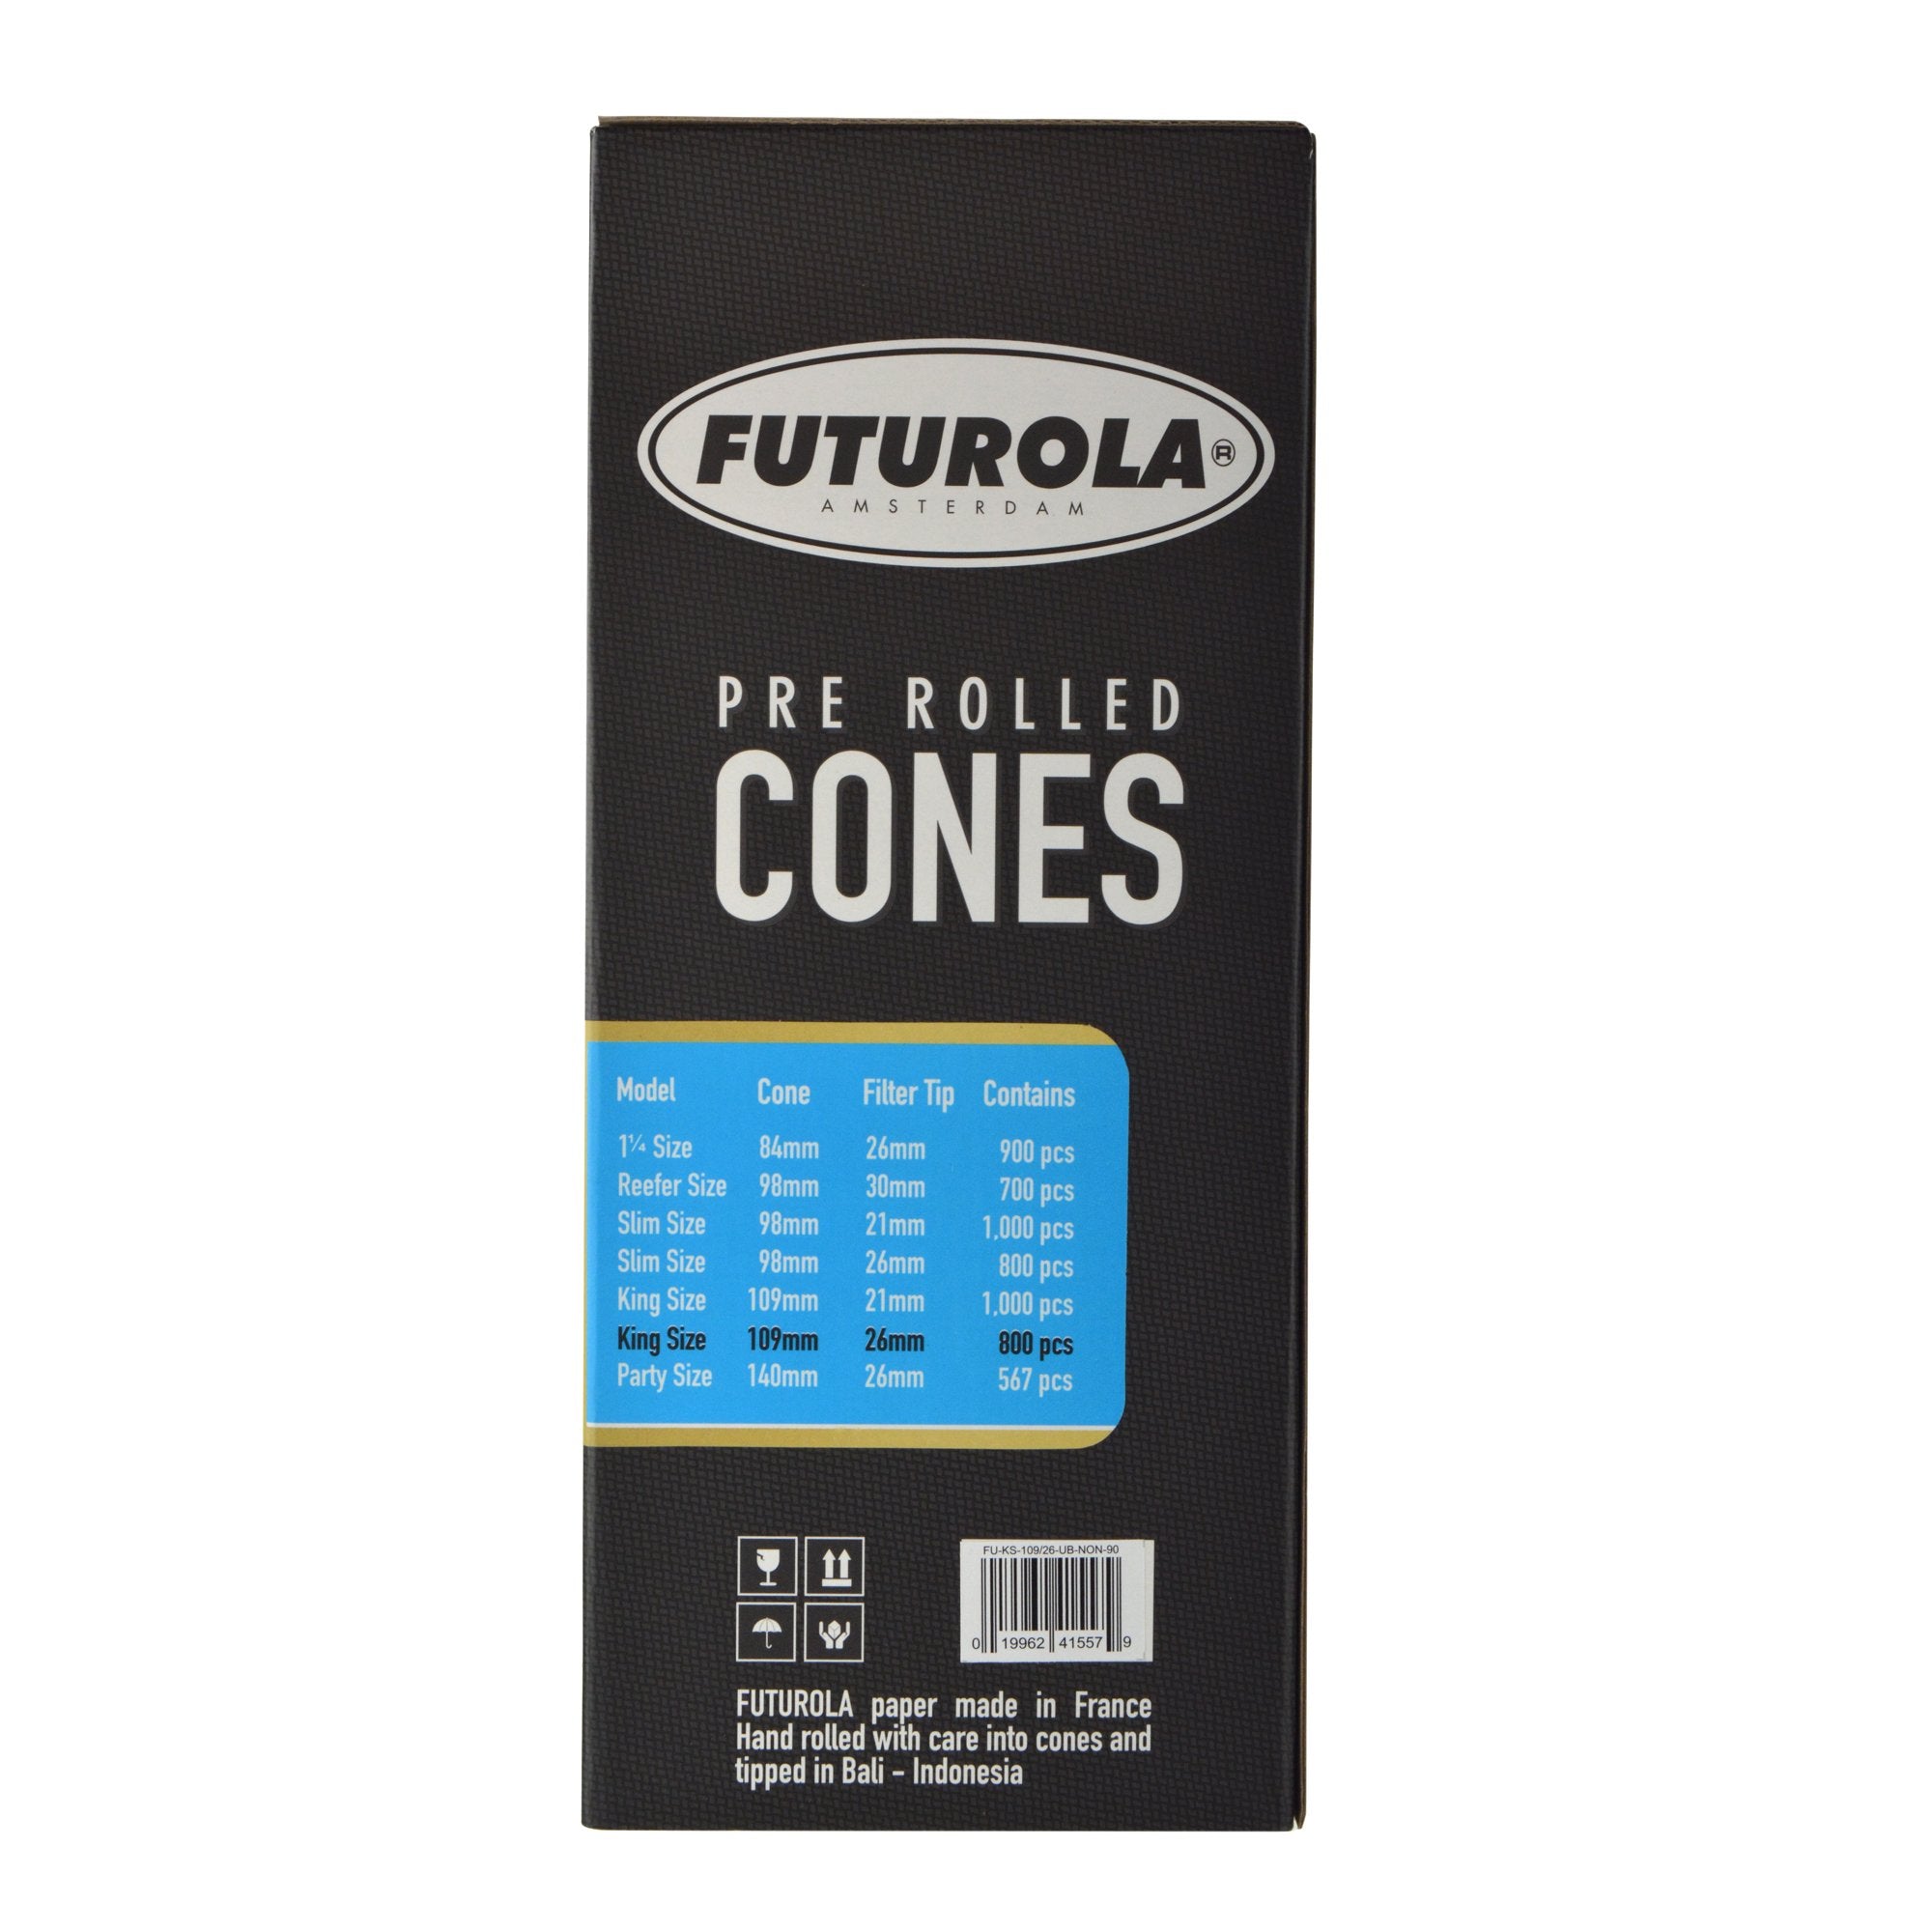 FUTUROLA | King Size Pre-Rolled Cones | 109mm - Dutch Brown Paper - 800 Count - 3